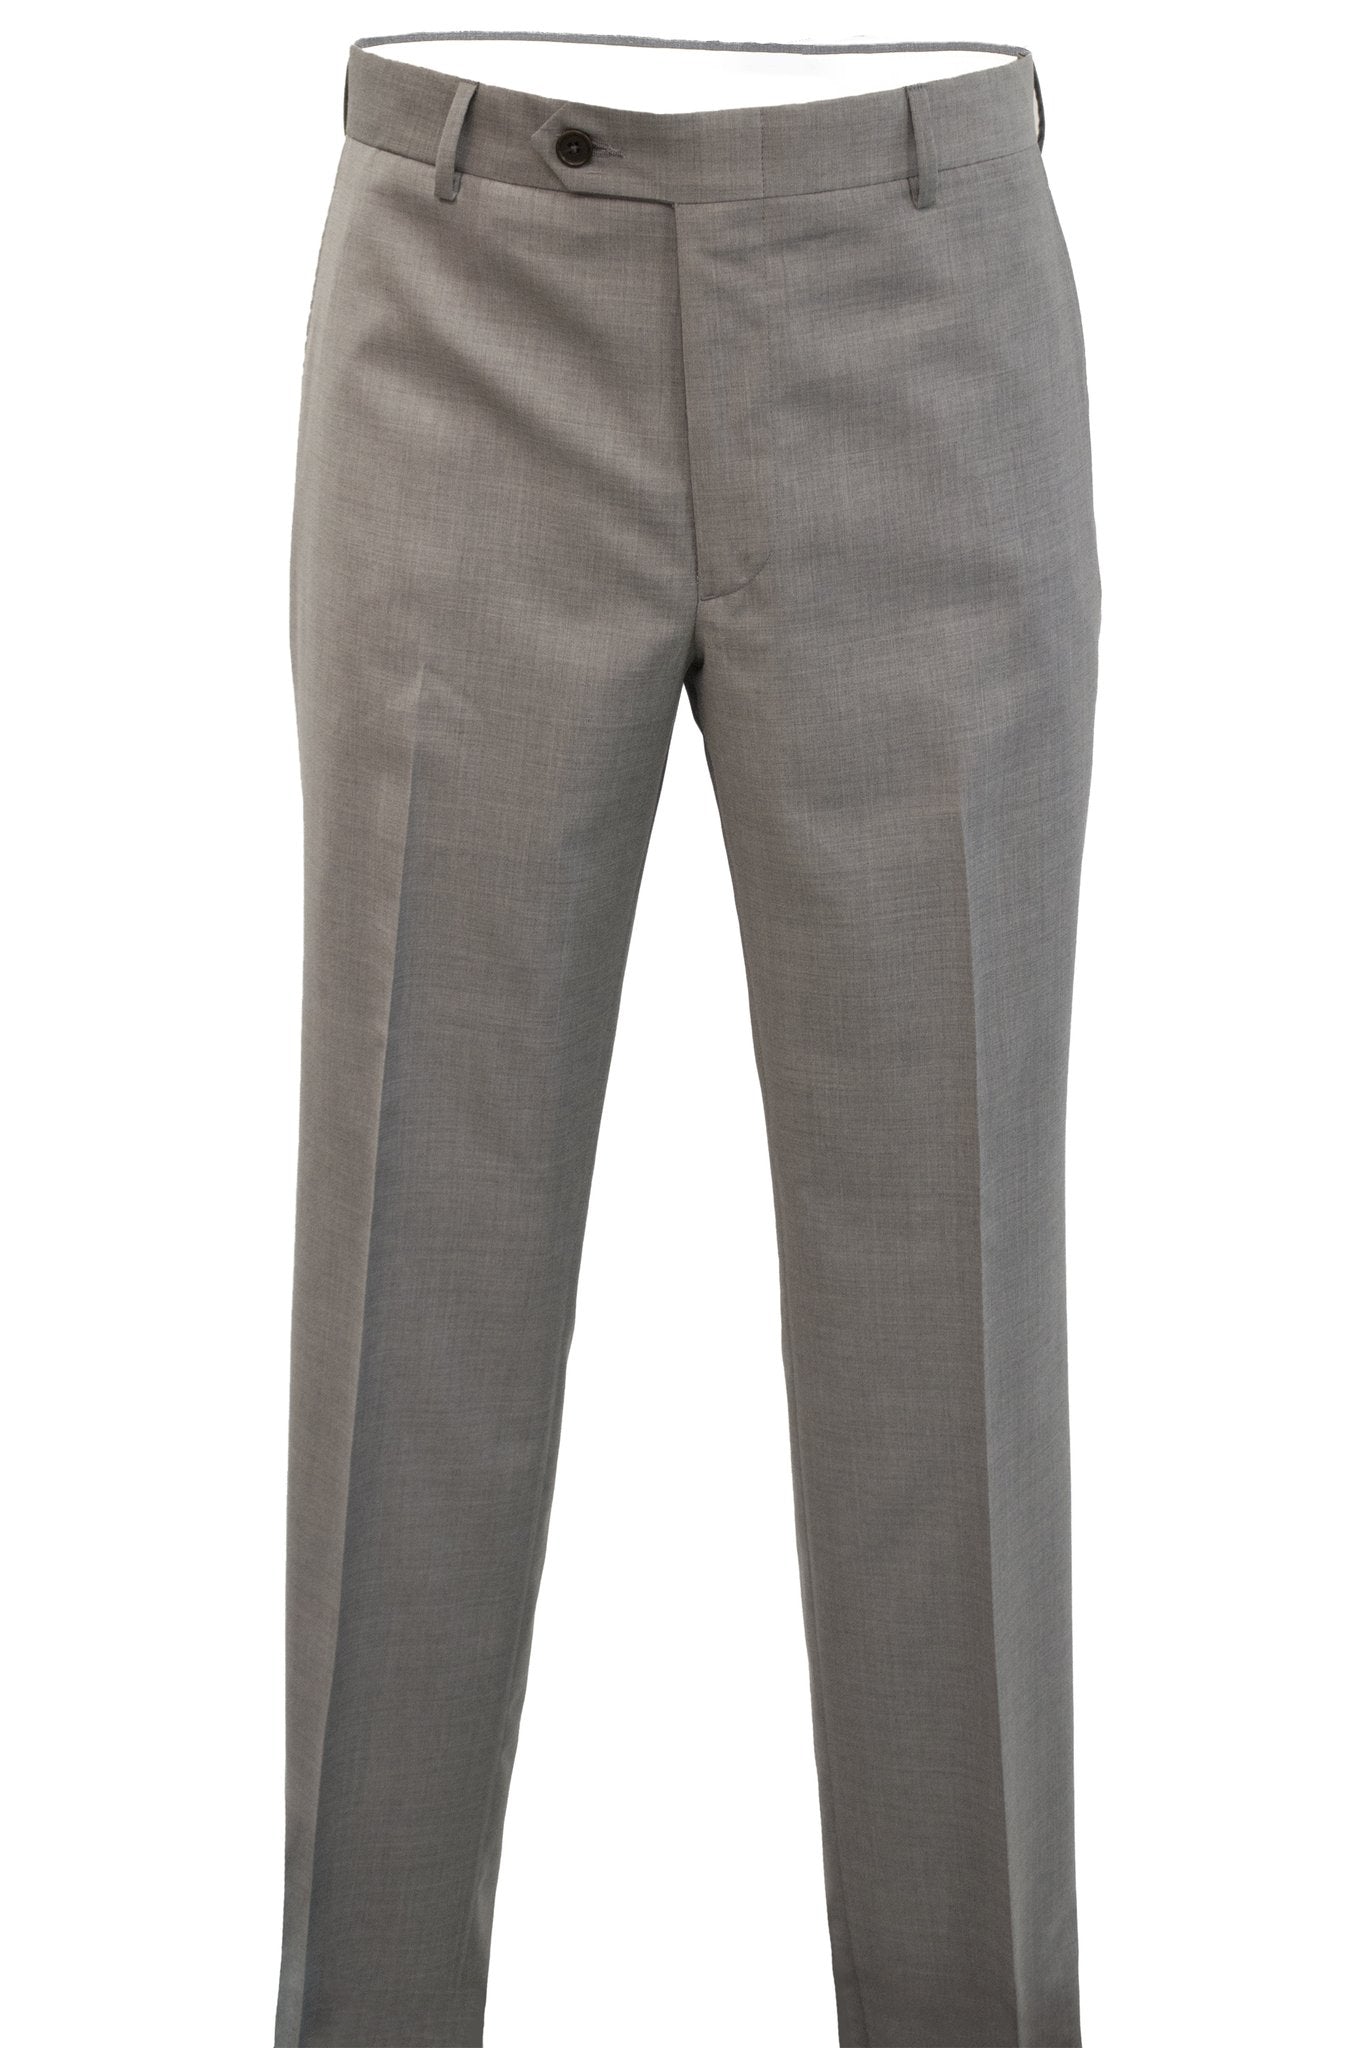 Men's Flat Front Pant Modern Cut - LT GREY 100% WOOL SUPER 120'S